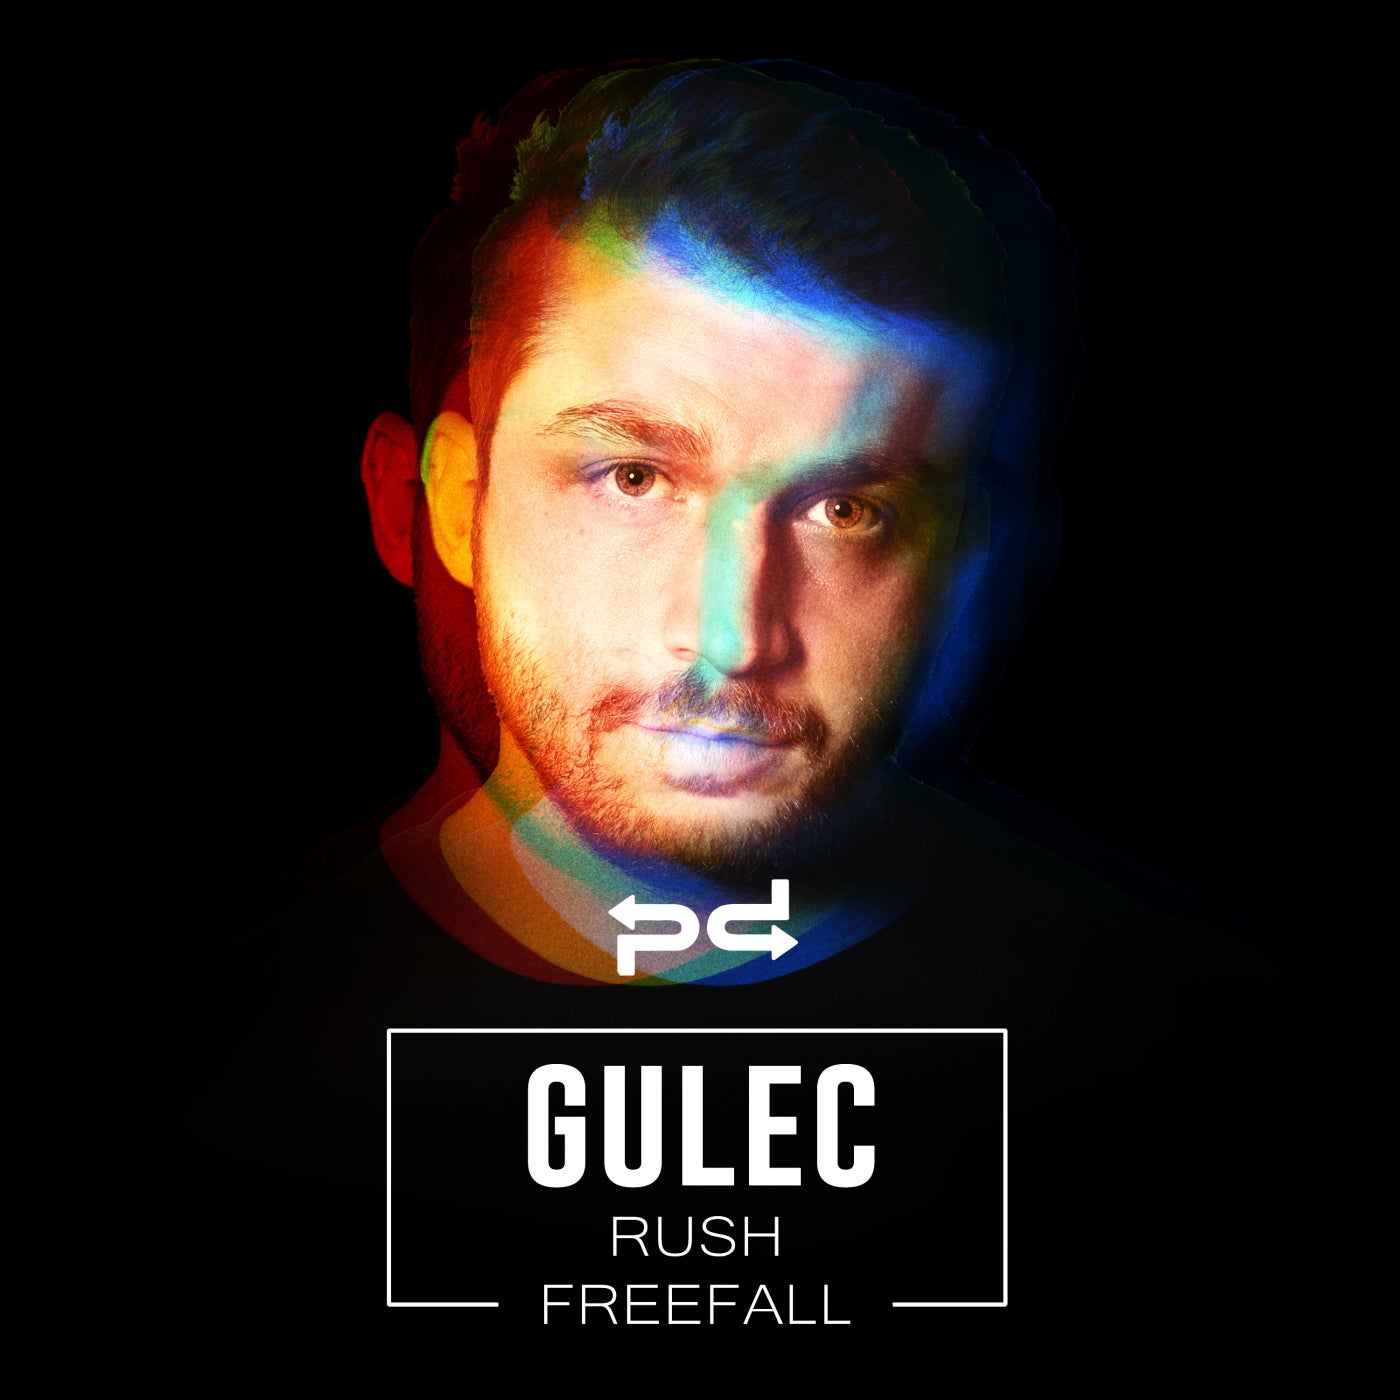 Gulec - Rush - Freefall [PSDI091]